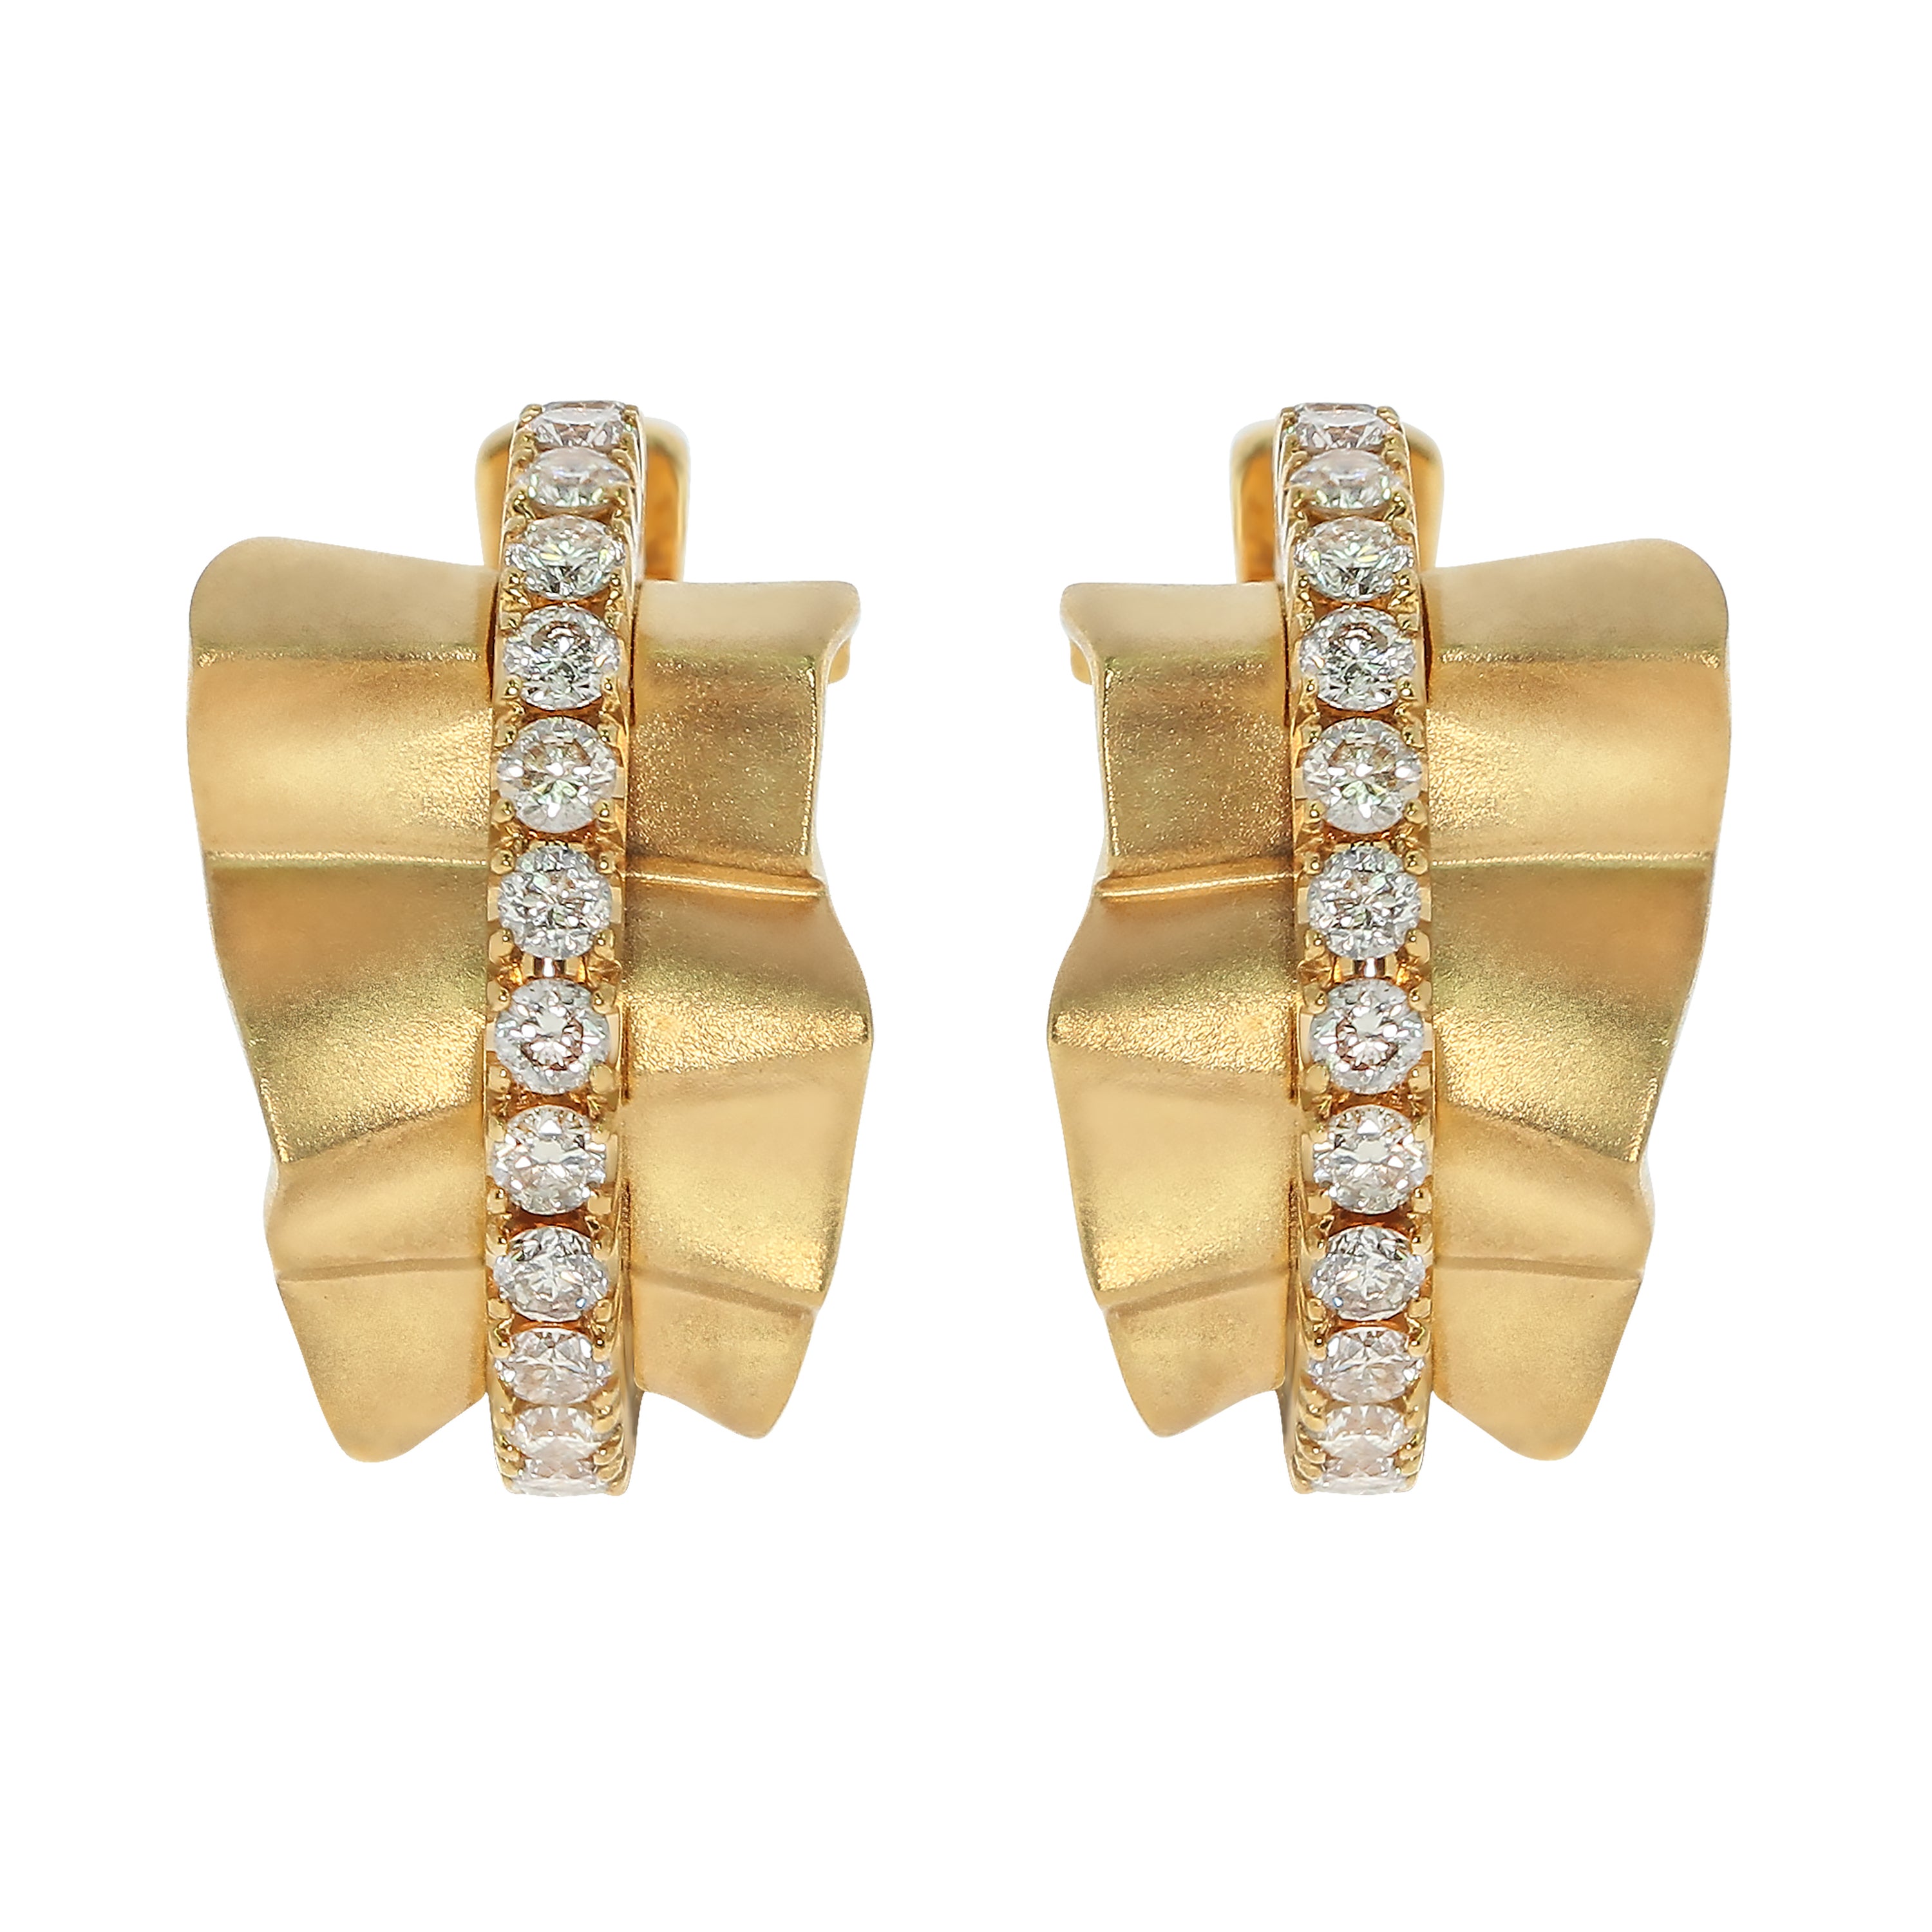 E 0002-0, 18K Yellow Gold, Champagne Diamonds Earrings